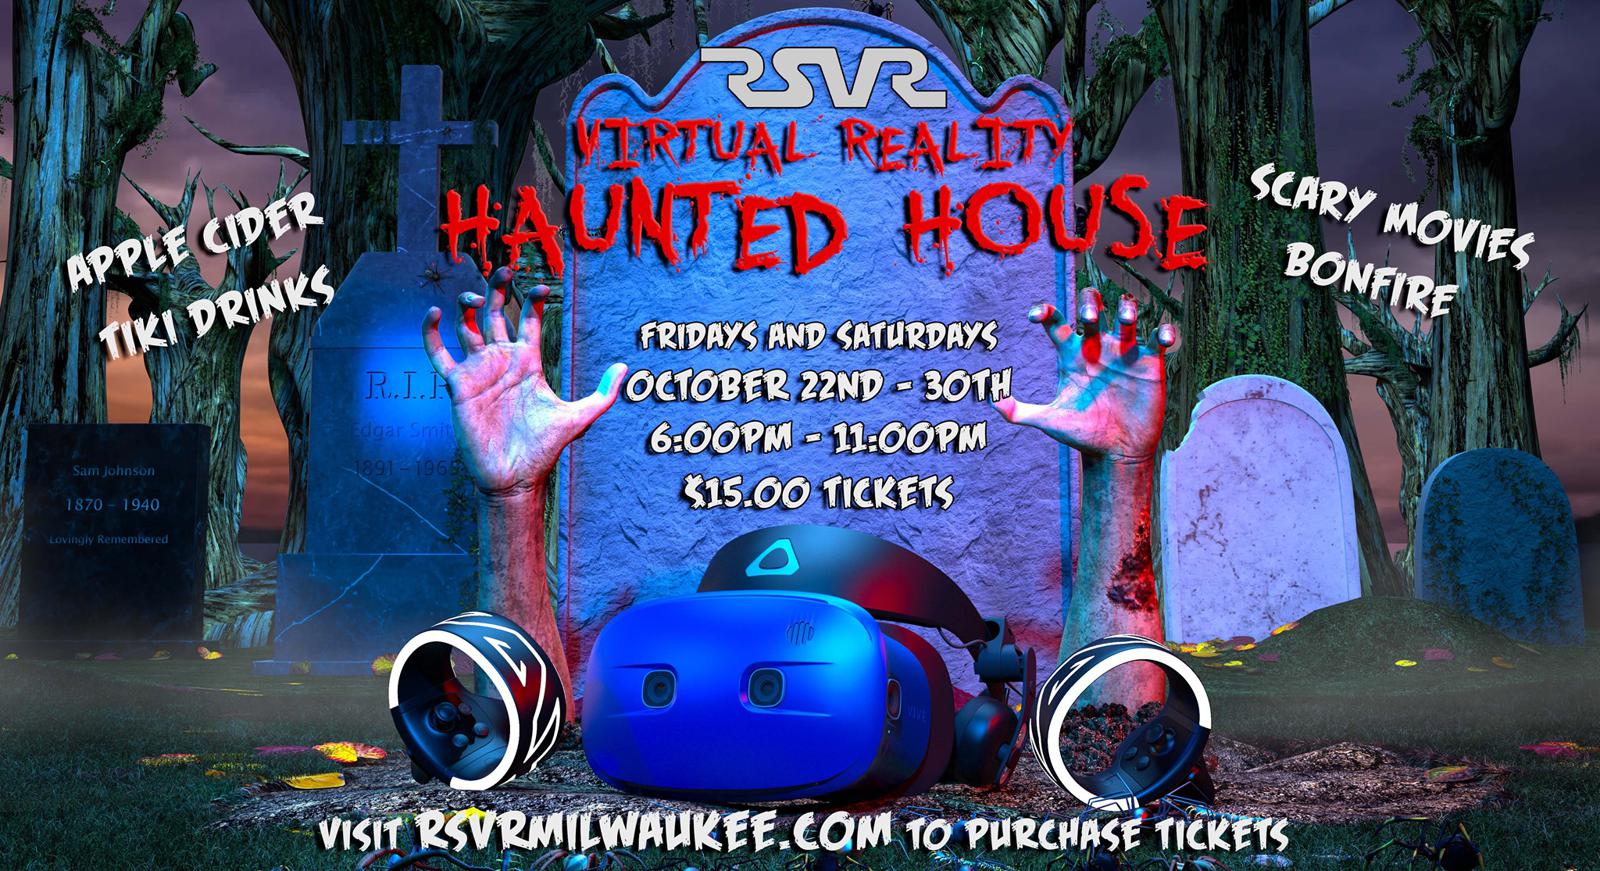 RSVR Haunted House 2021 flyer